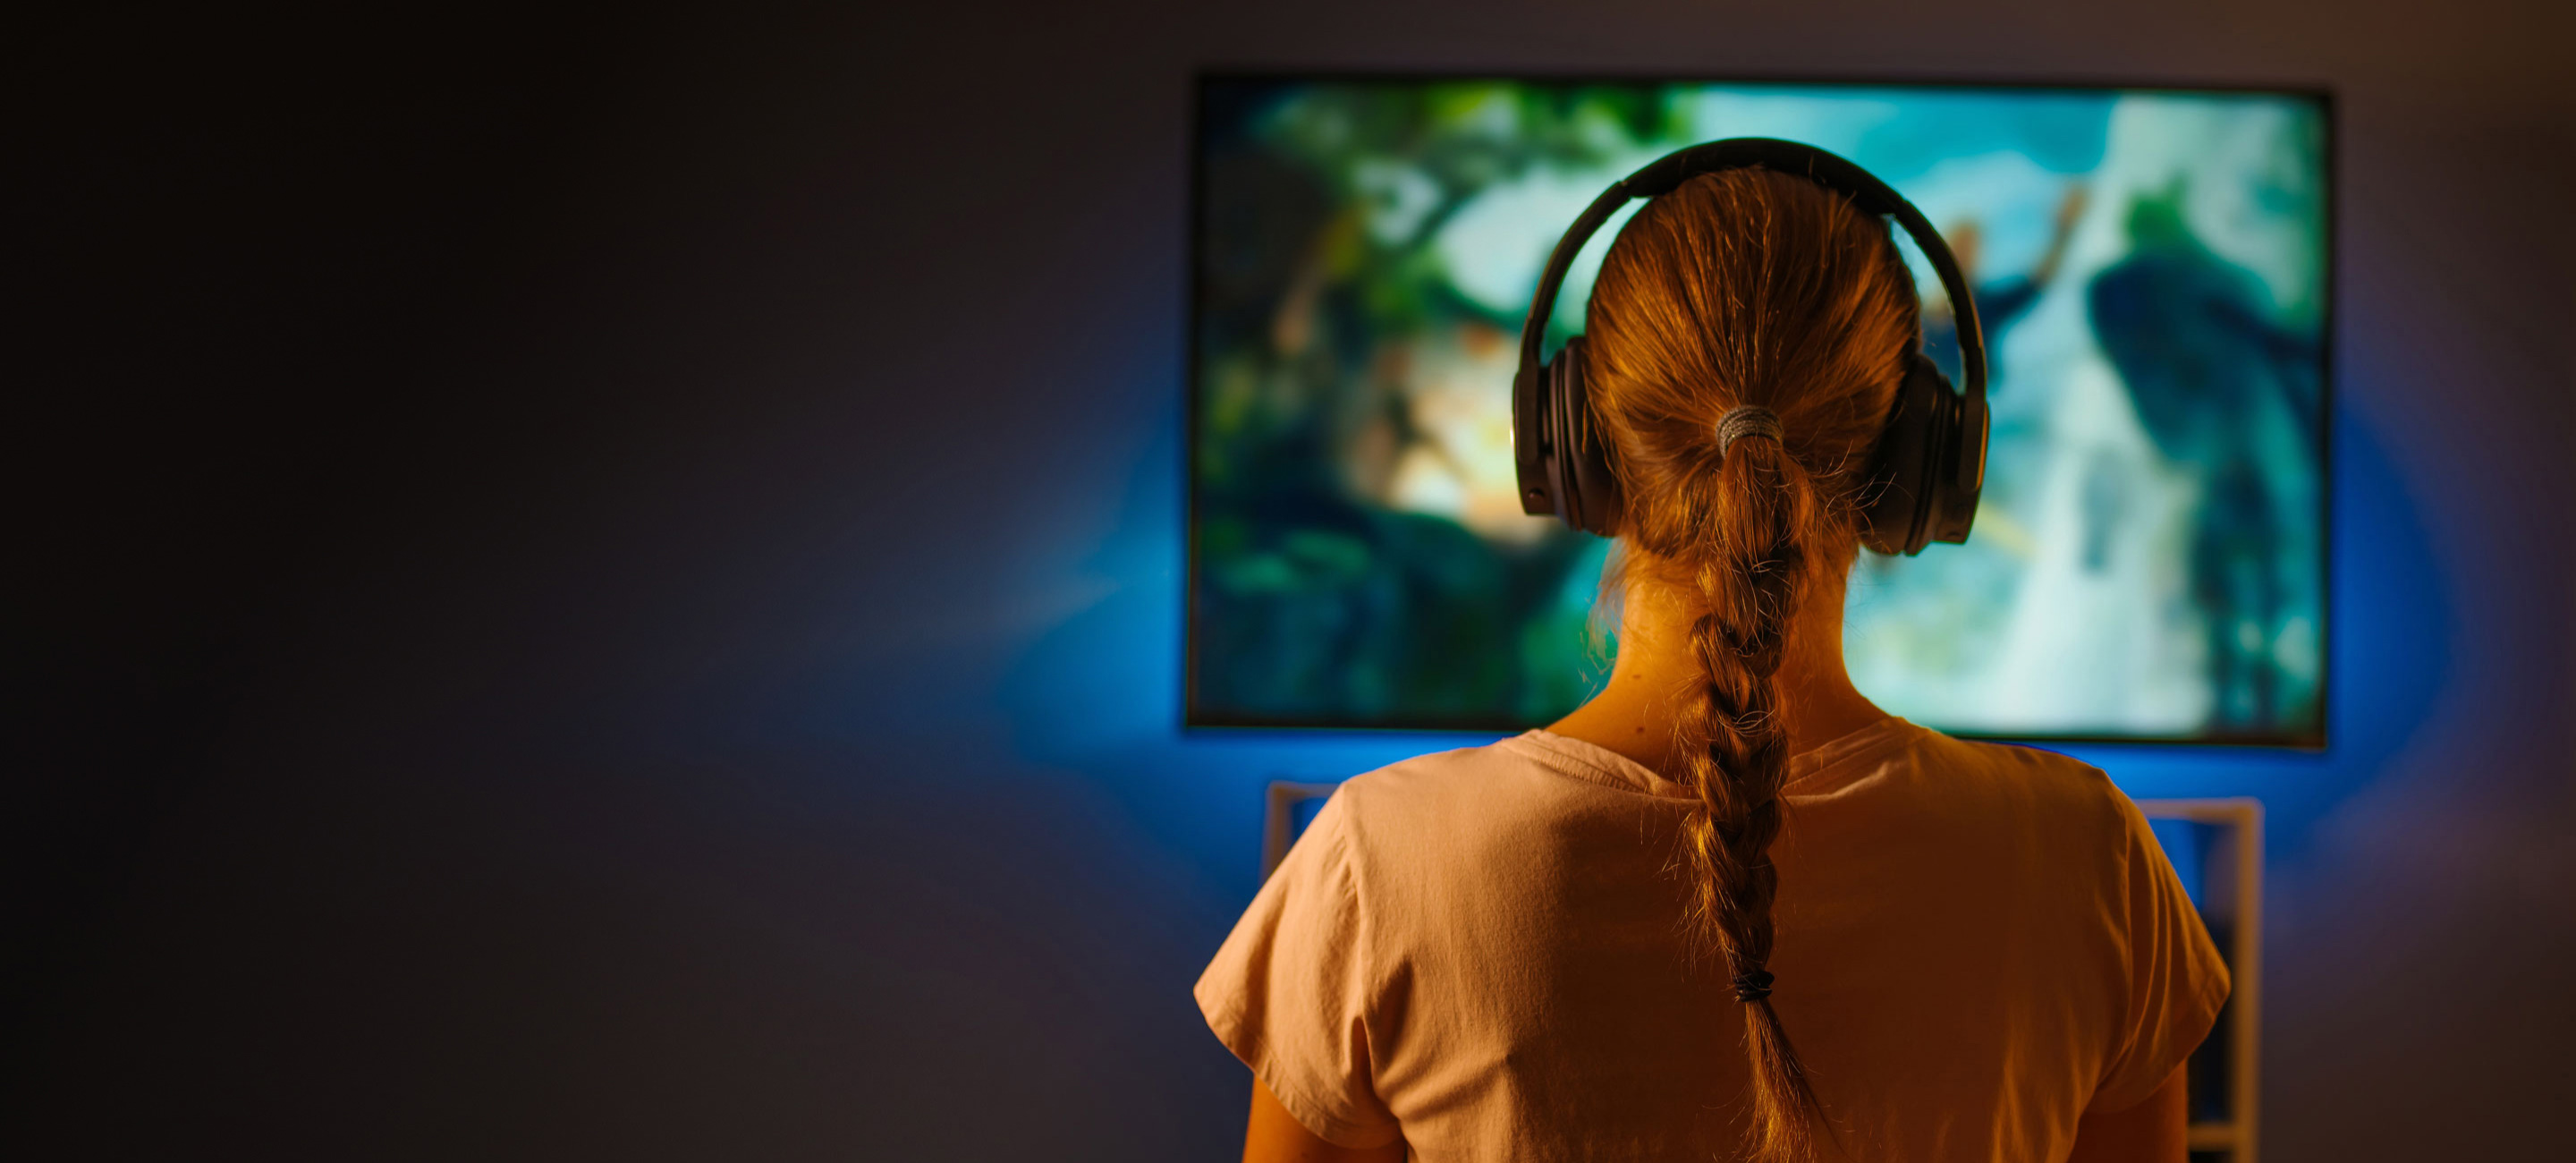 woman watching TV with headphones